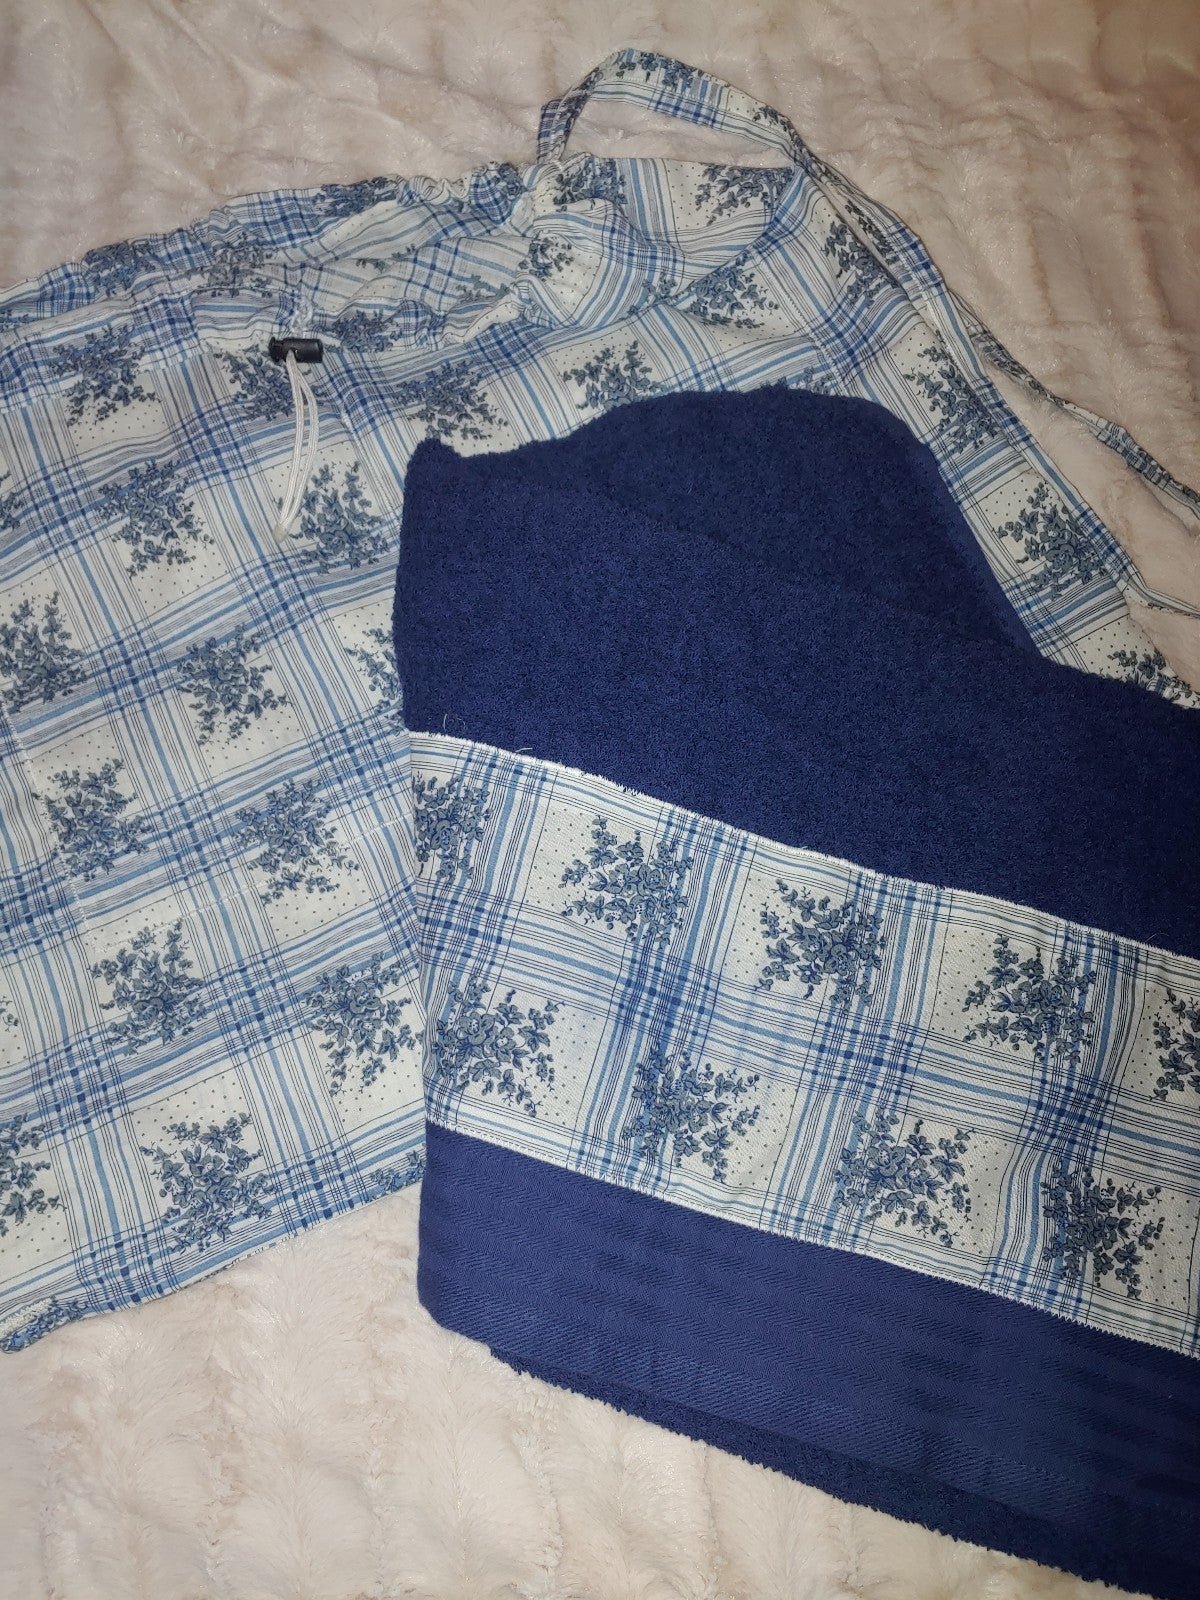 Handmade Beachbag Backpack with Matching Towel 1mnLu0GJ